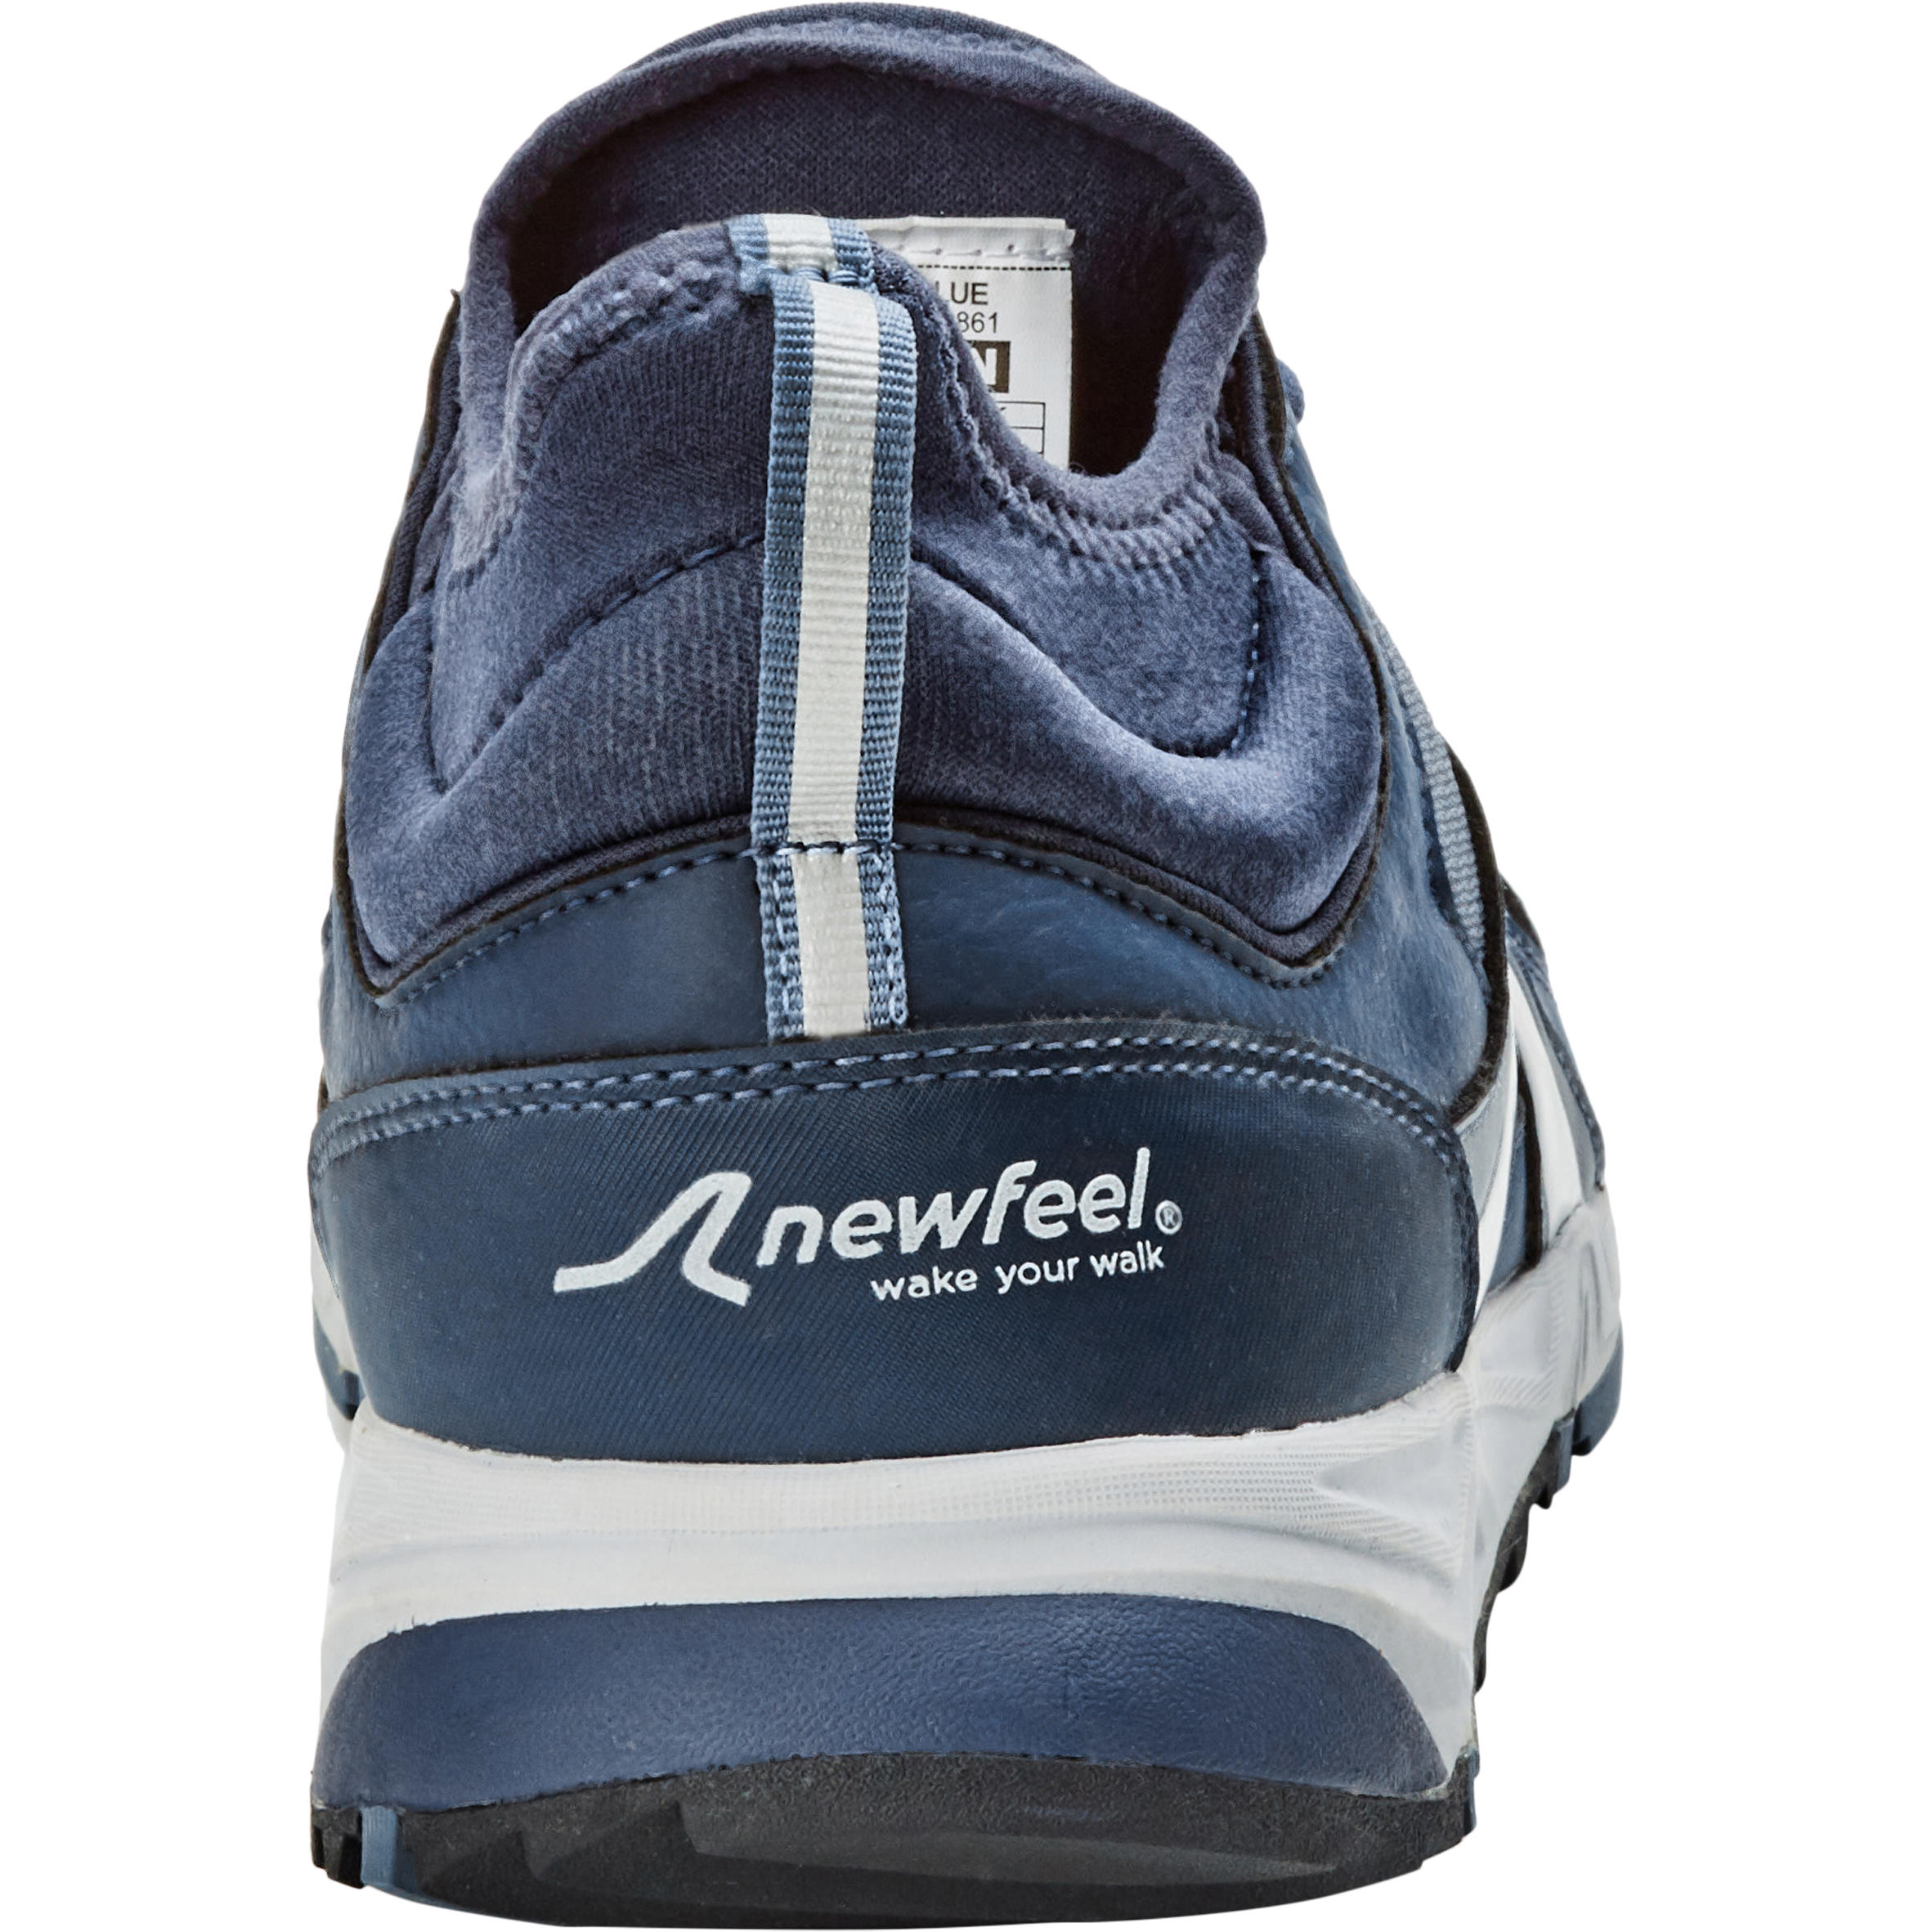 Nordic walking shoes navy blue 